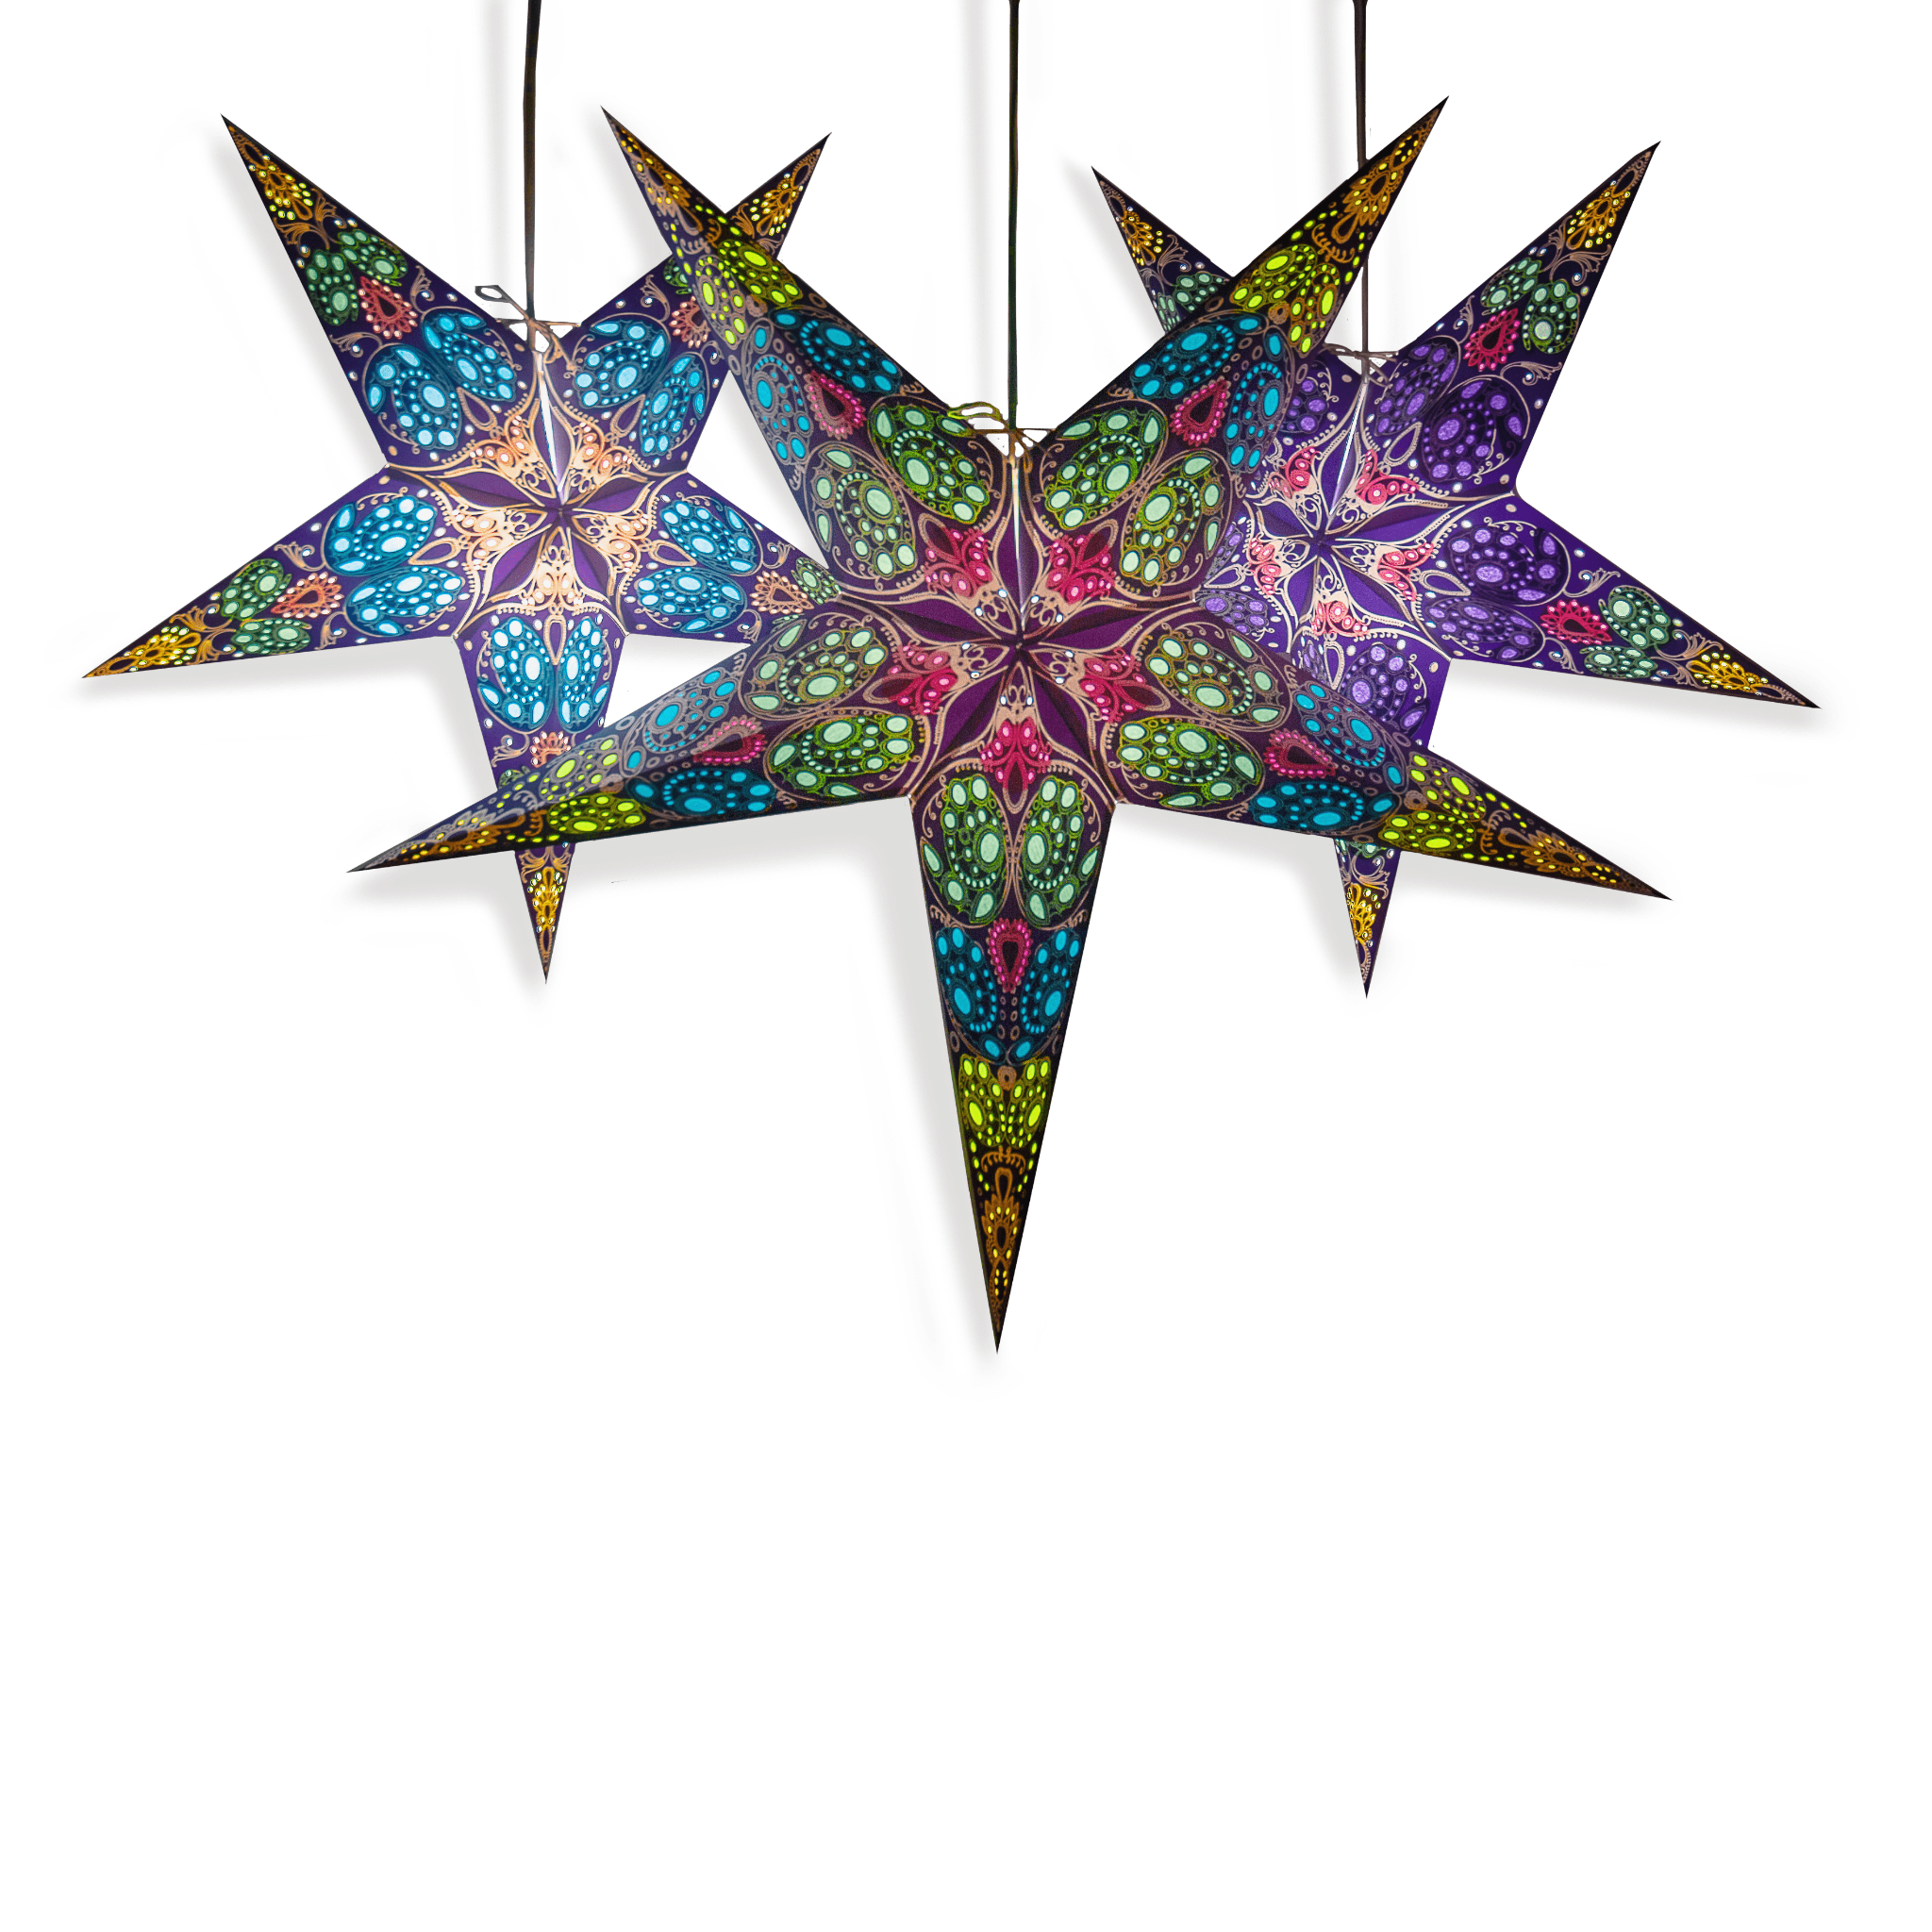 3 multi coloured paper star lanterns